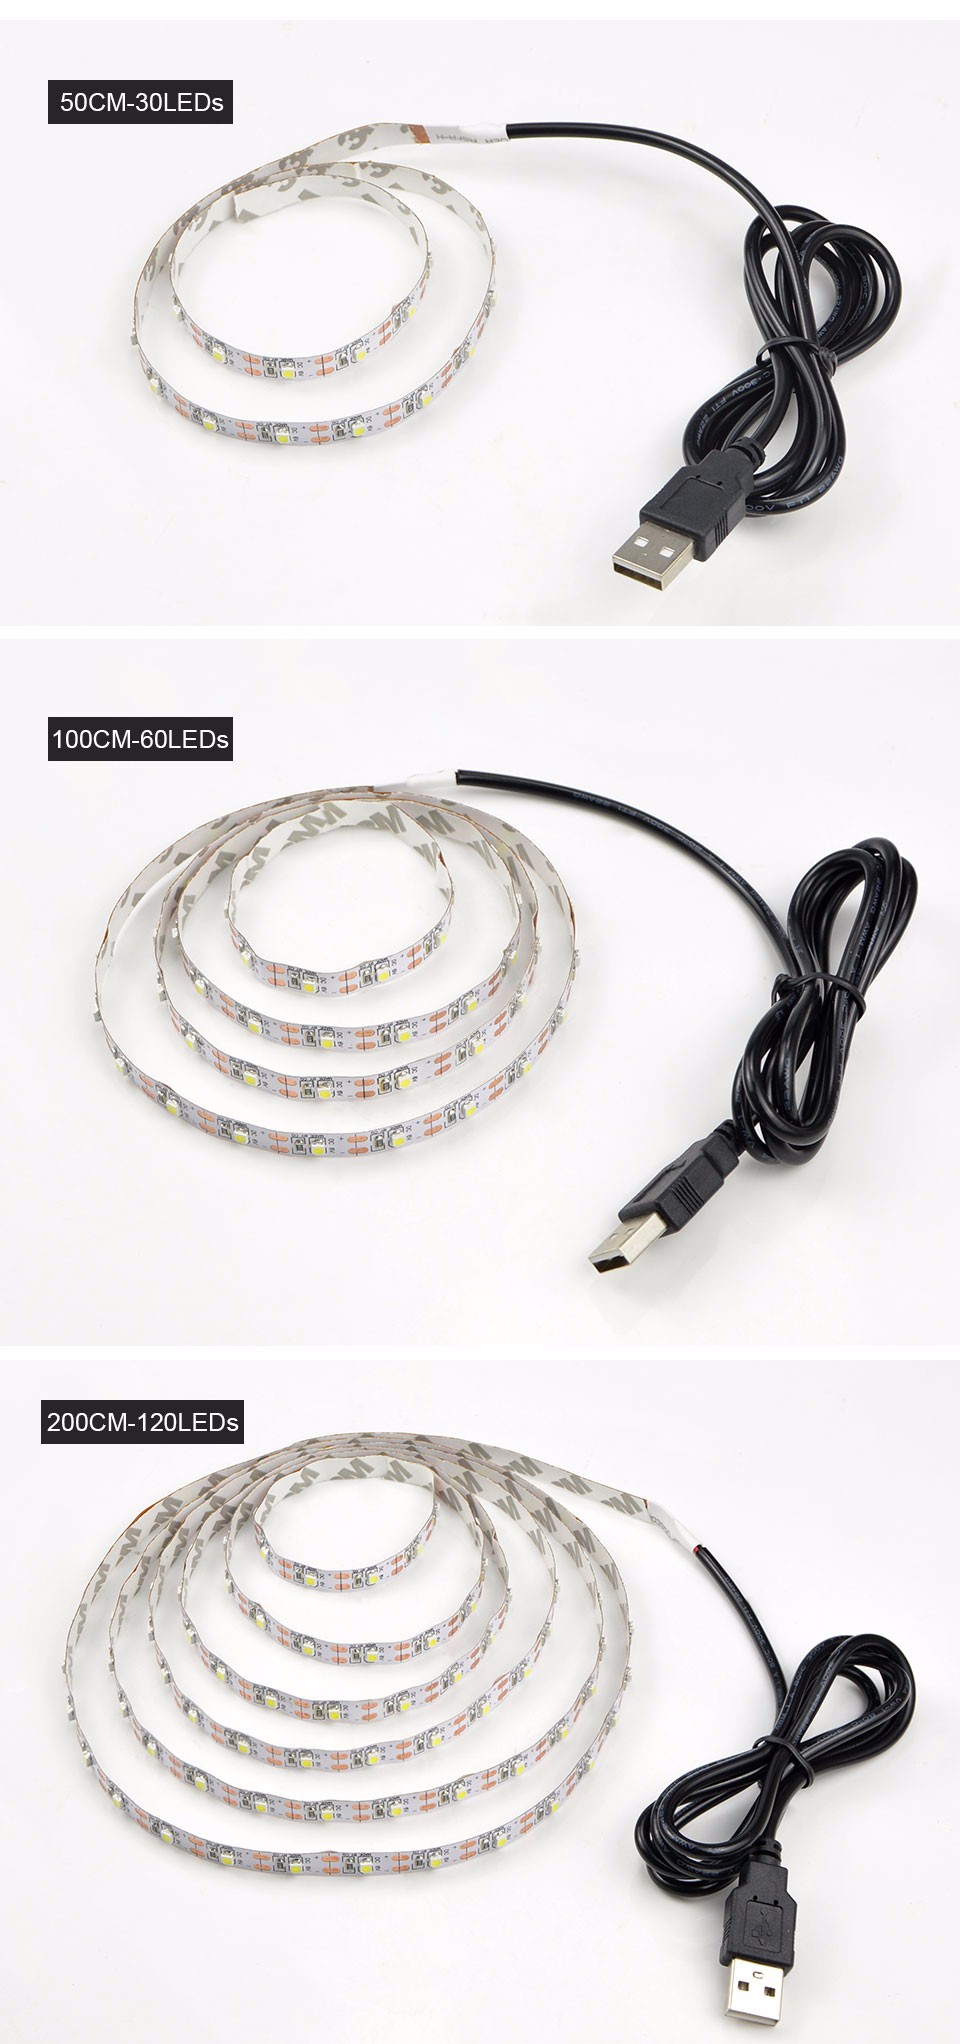 LED Lamp DC 5V RGB USB LED Strip Light 3528 SMD 1M 2M 3M 4M 5M white warm Flexible ribbon Tape TV Background home lighting